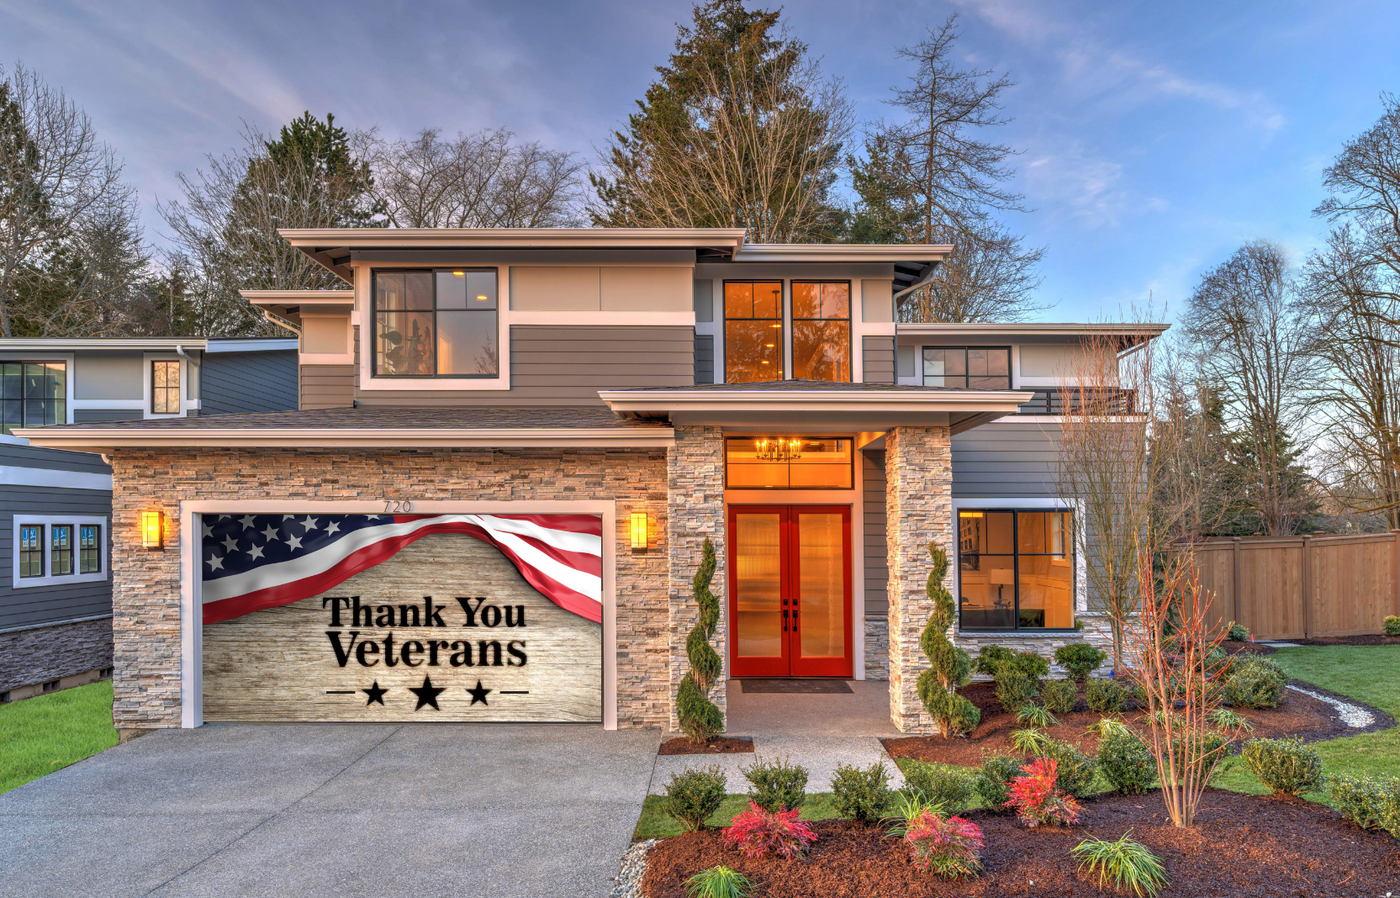 Thank You Veterans Garage Door Wrap Cover Decoration Banner Backdrop